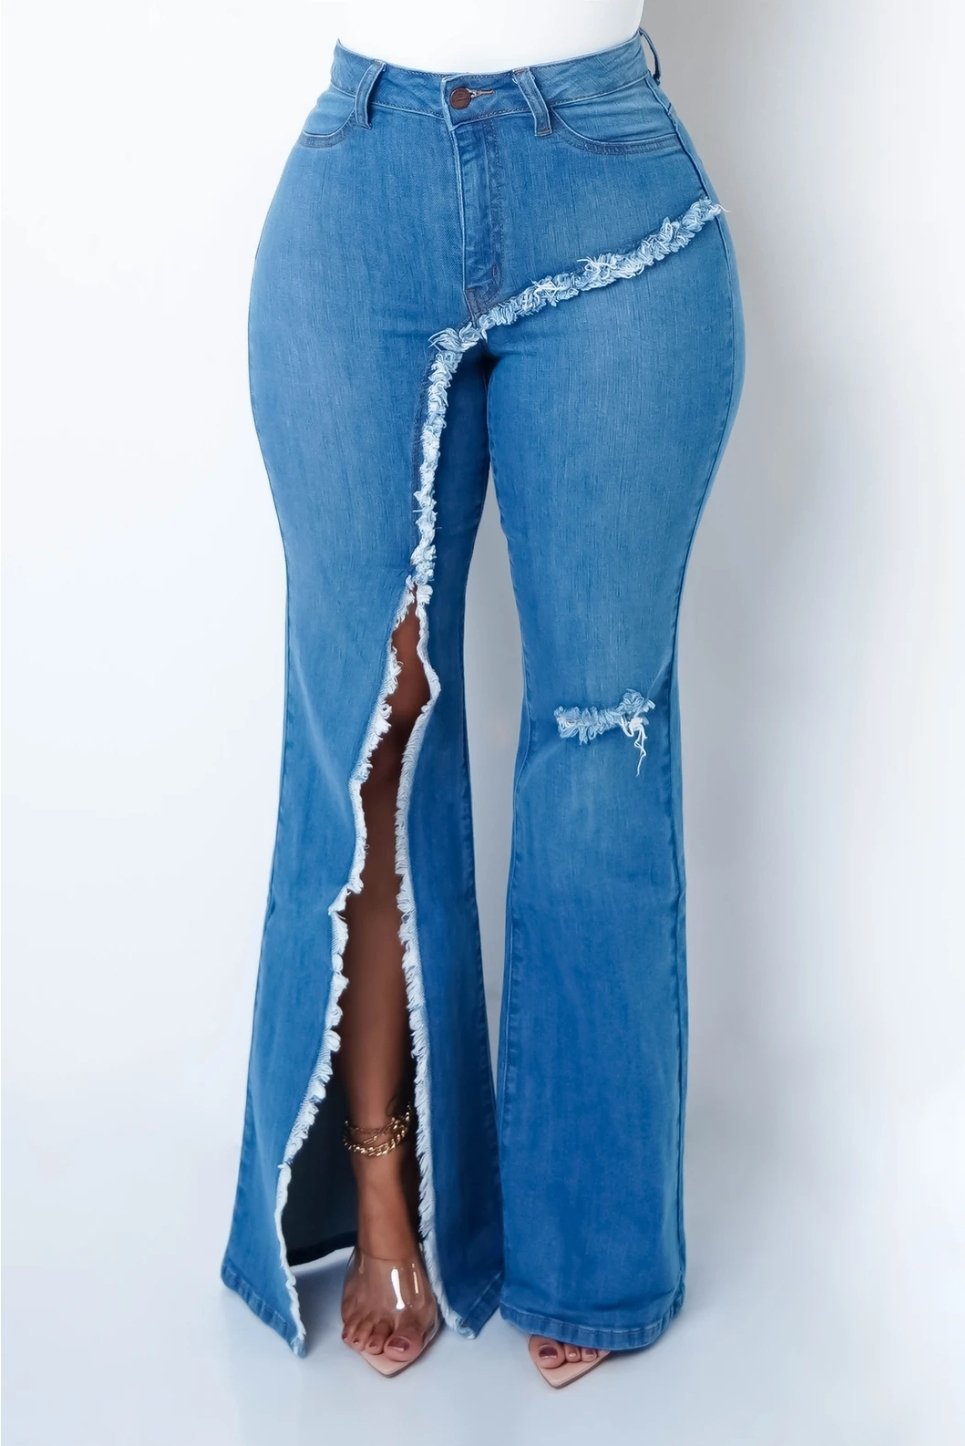 New style elastic ripped flared pants jeans women - Carvan Mart Ltd